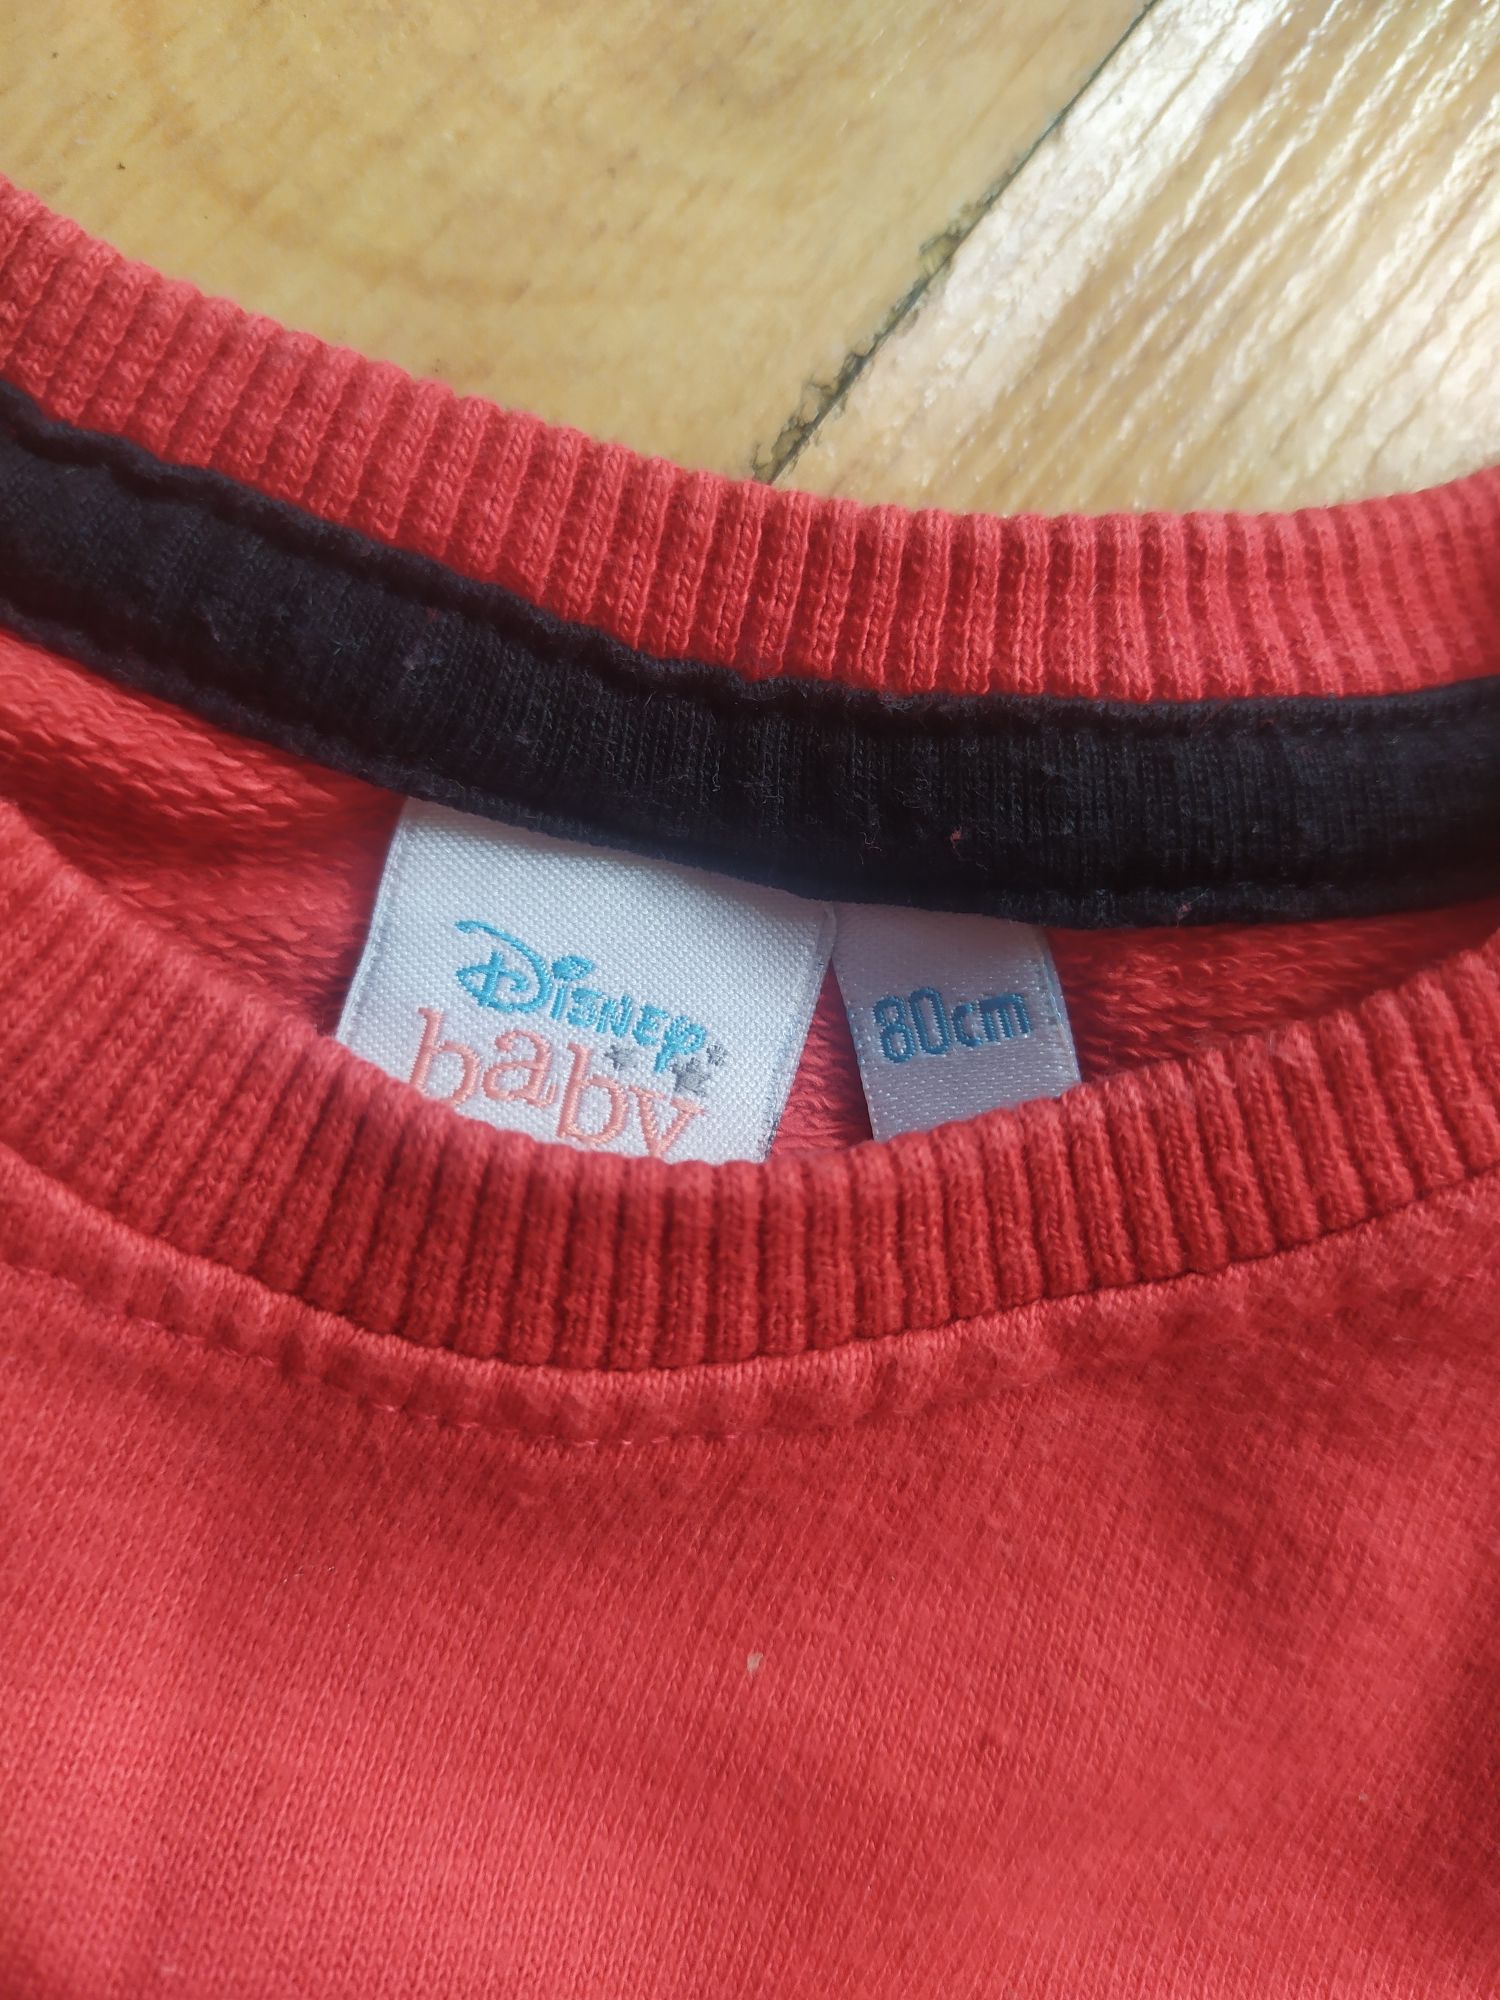 Dres kompletny spodnie bluza Minnie Disney Baby 80 9-12m